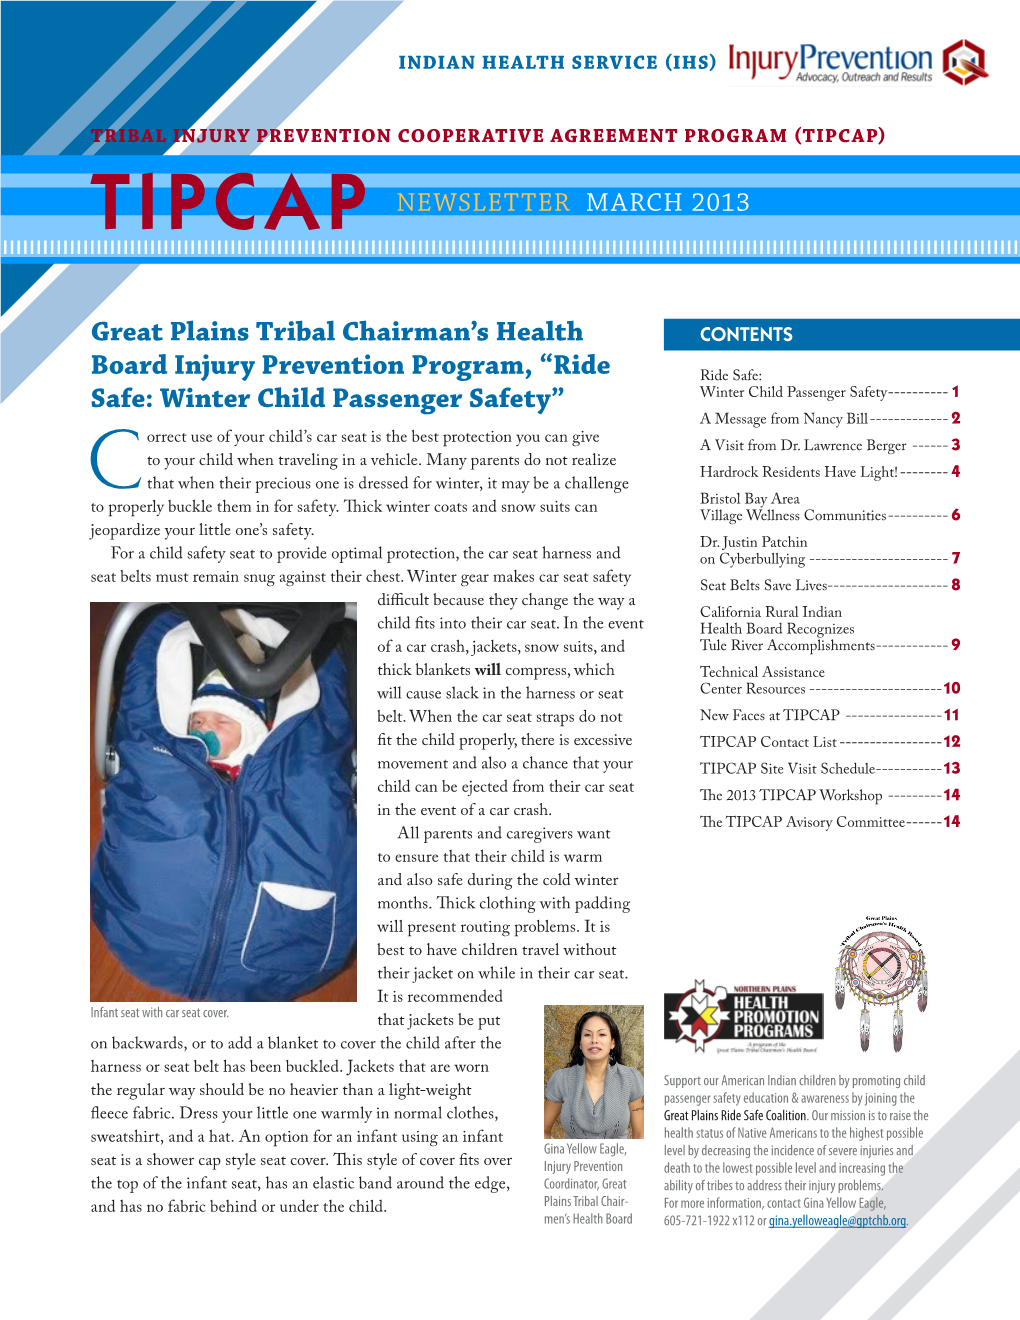 Tipcap Newsletter March 2013